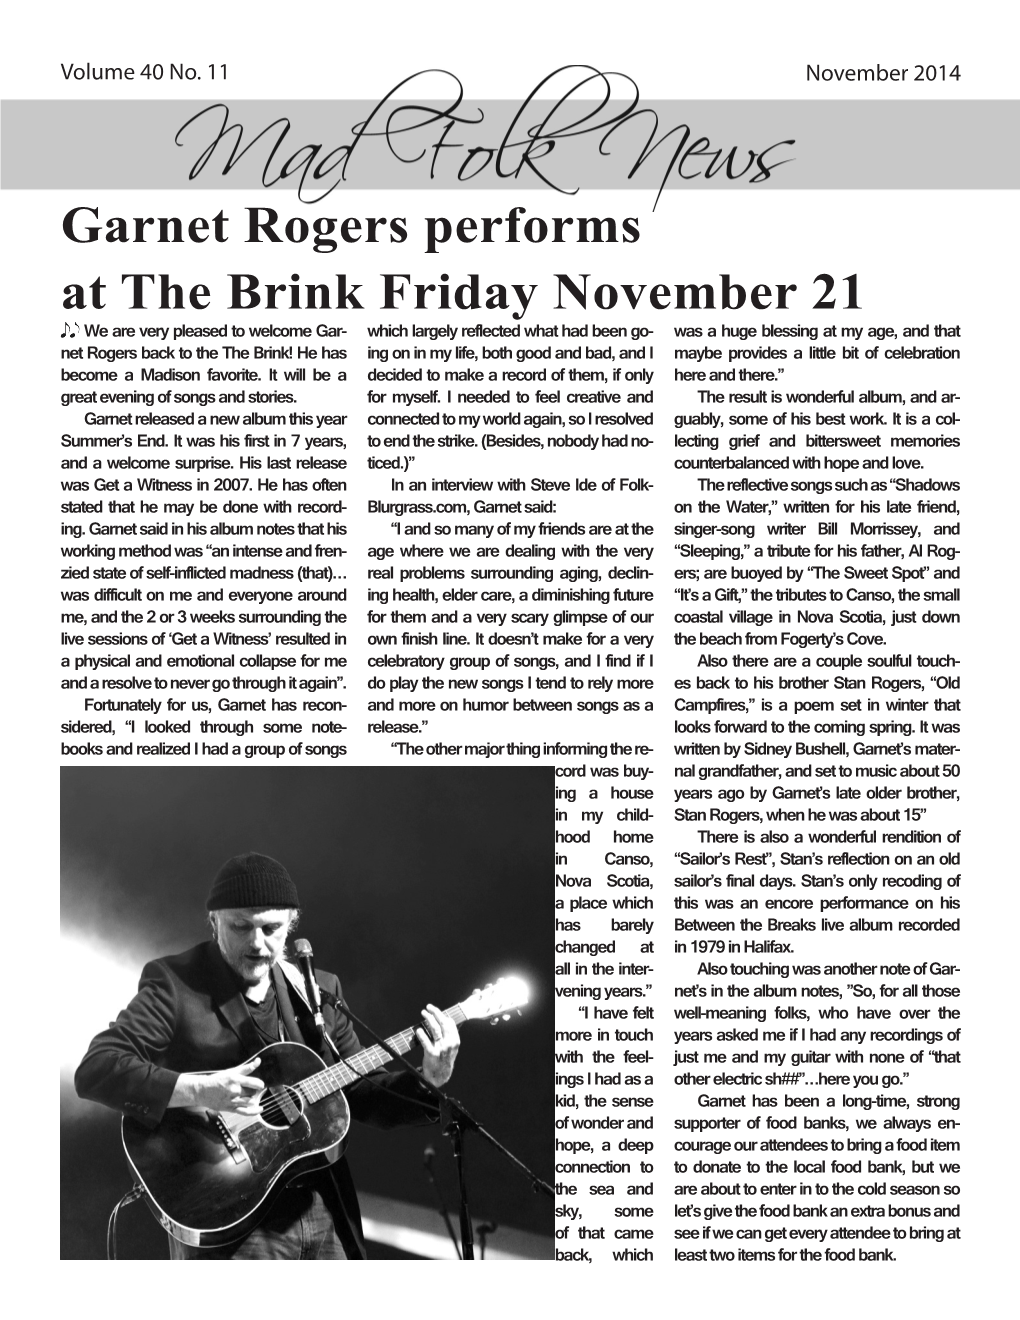 Garnet Rogers Performs at the Brink Friday November 21